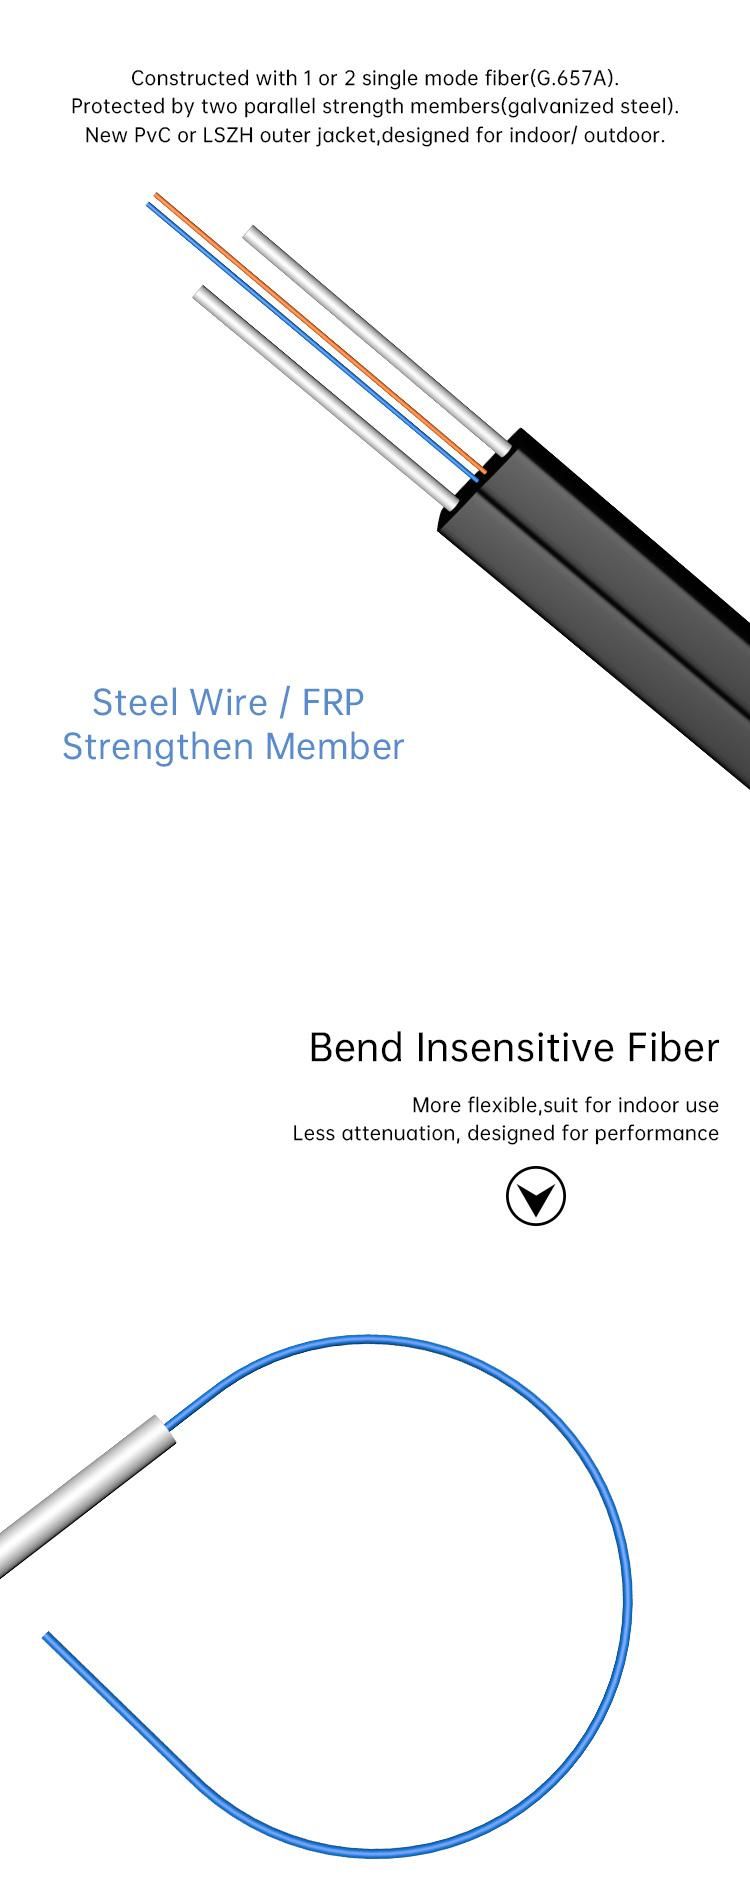 1 Core 2 Core Singlemode FRP G657A2 Galvanized Steel Wire FTTH Drop Fiber Optical Cable